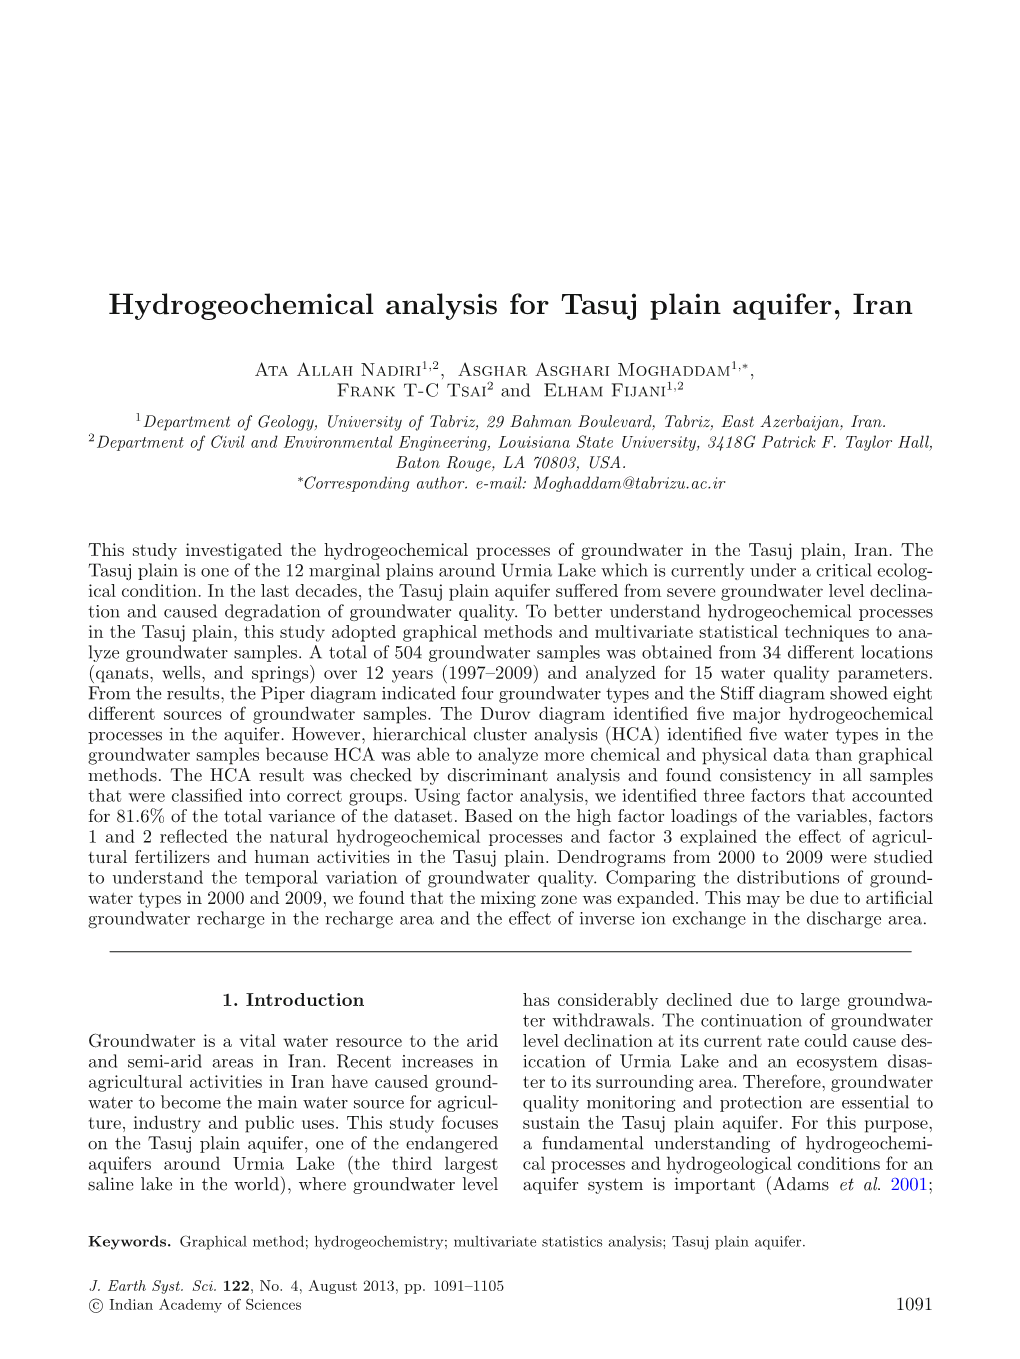 Hydrogeochemical Analysis for Tasuj Plain Aquifer, Iran